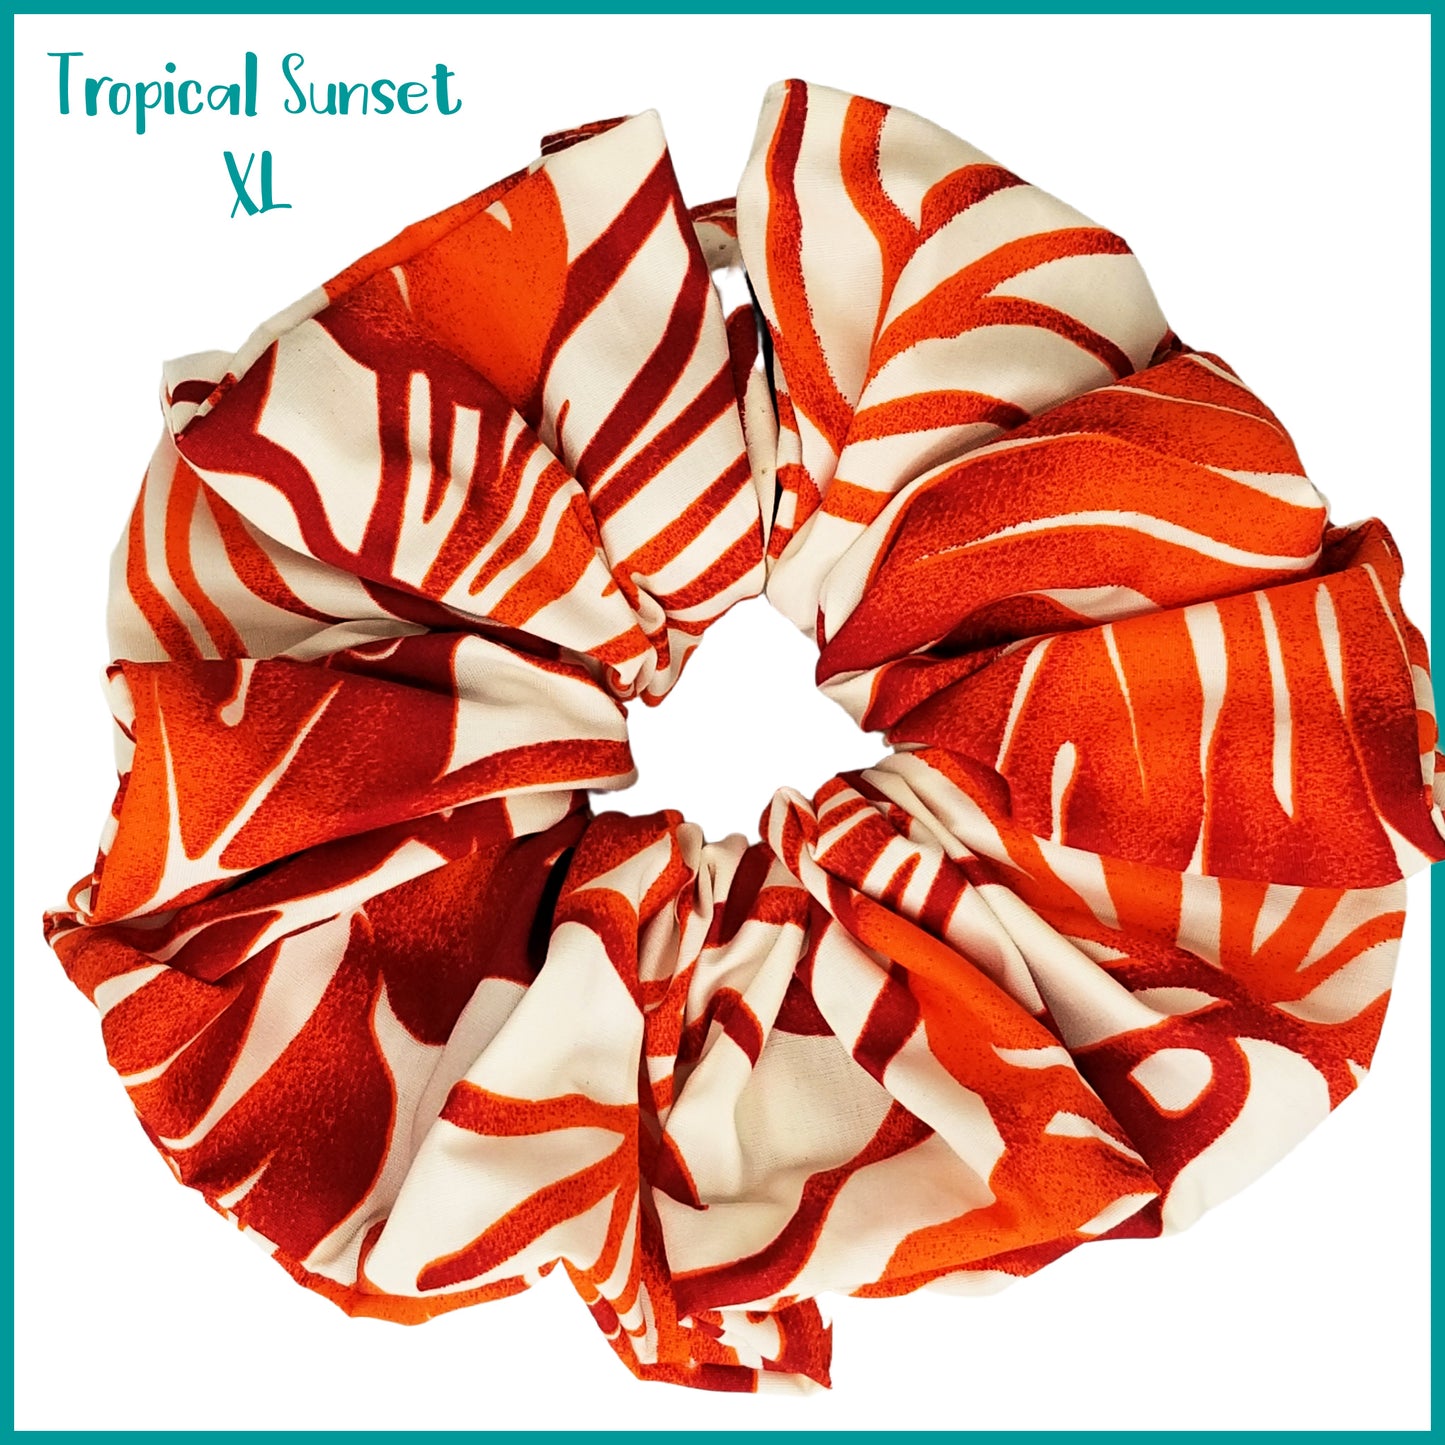 Giant Hawaiian Scrunchie, Tropical Sunset XL Scrunchie